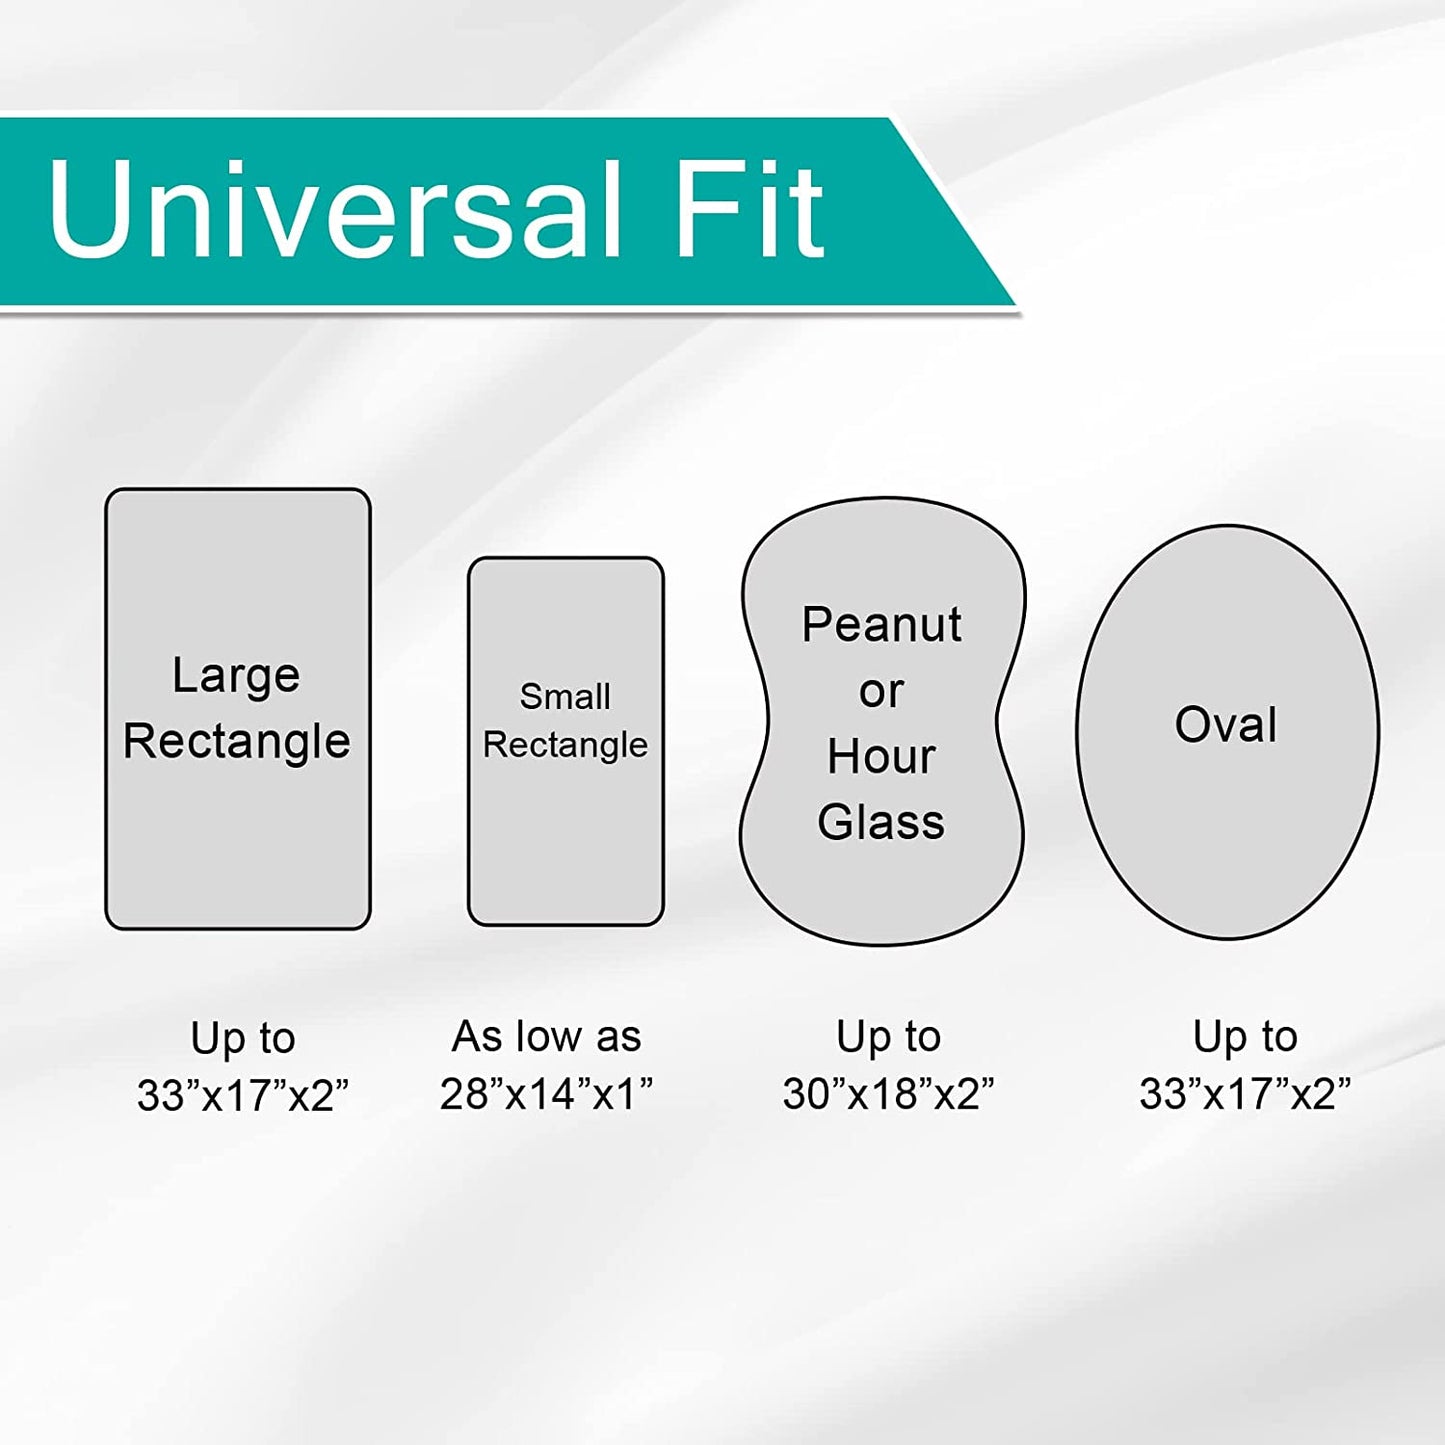 Universal fit Bassinet Sheets, 32" x 17" - 2 Pack, Microfiber